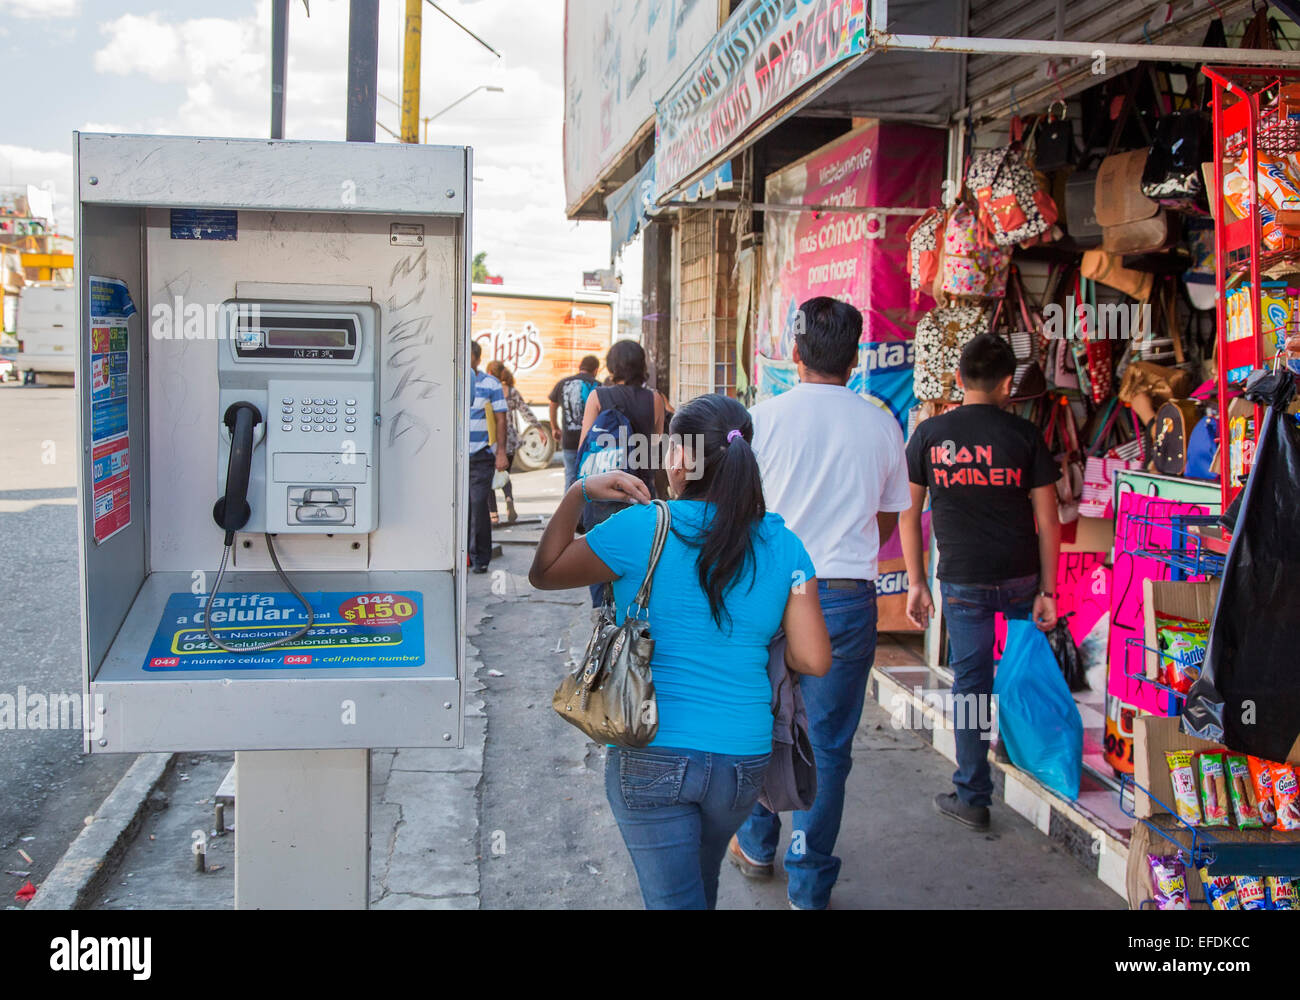 Oaxaca, Mexico - A public, pay telephone on the street. Stock Photo